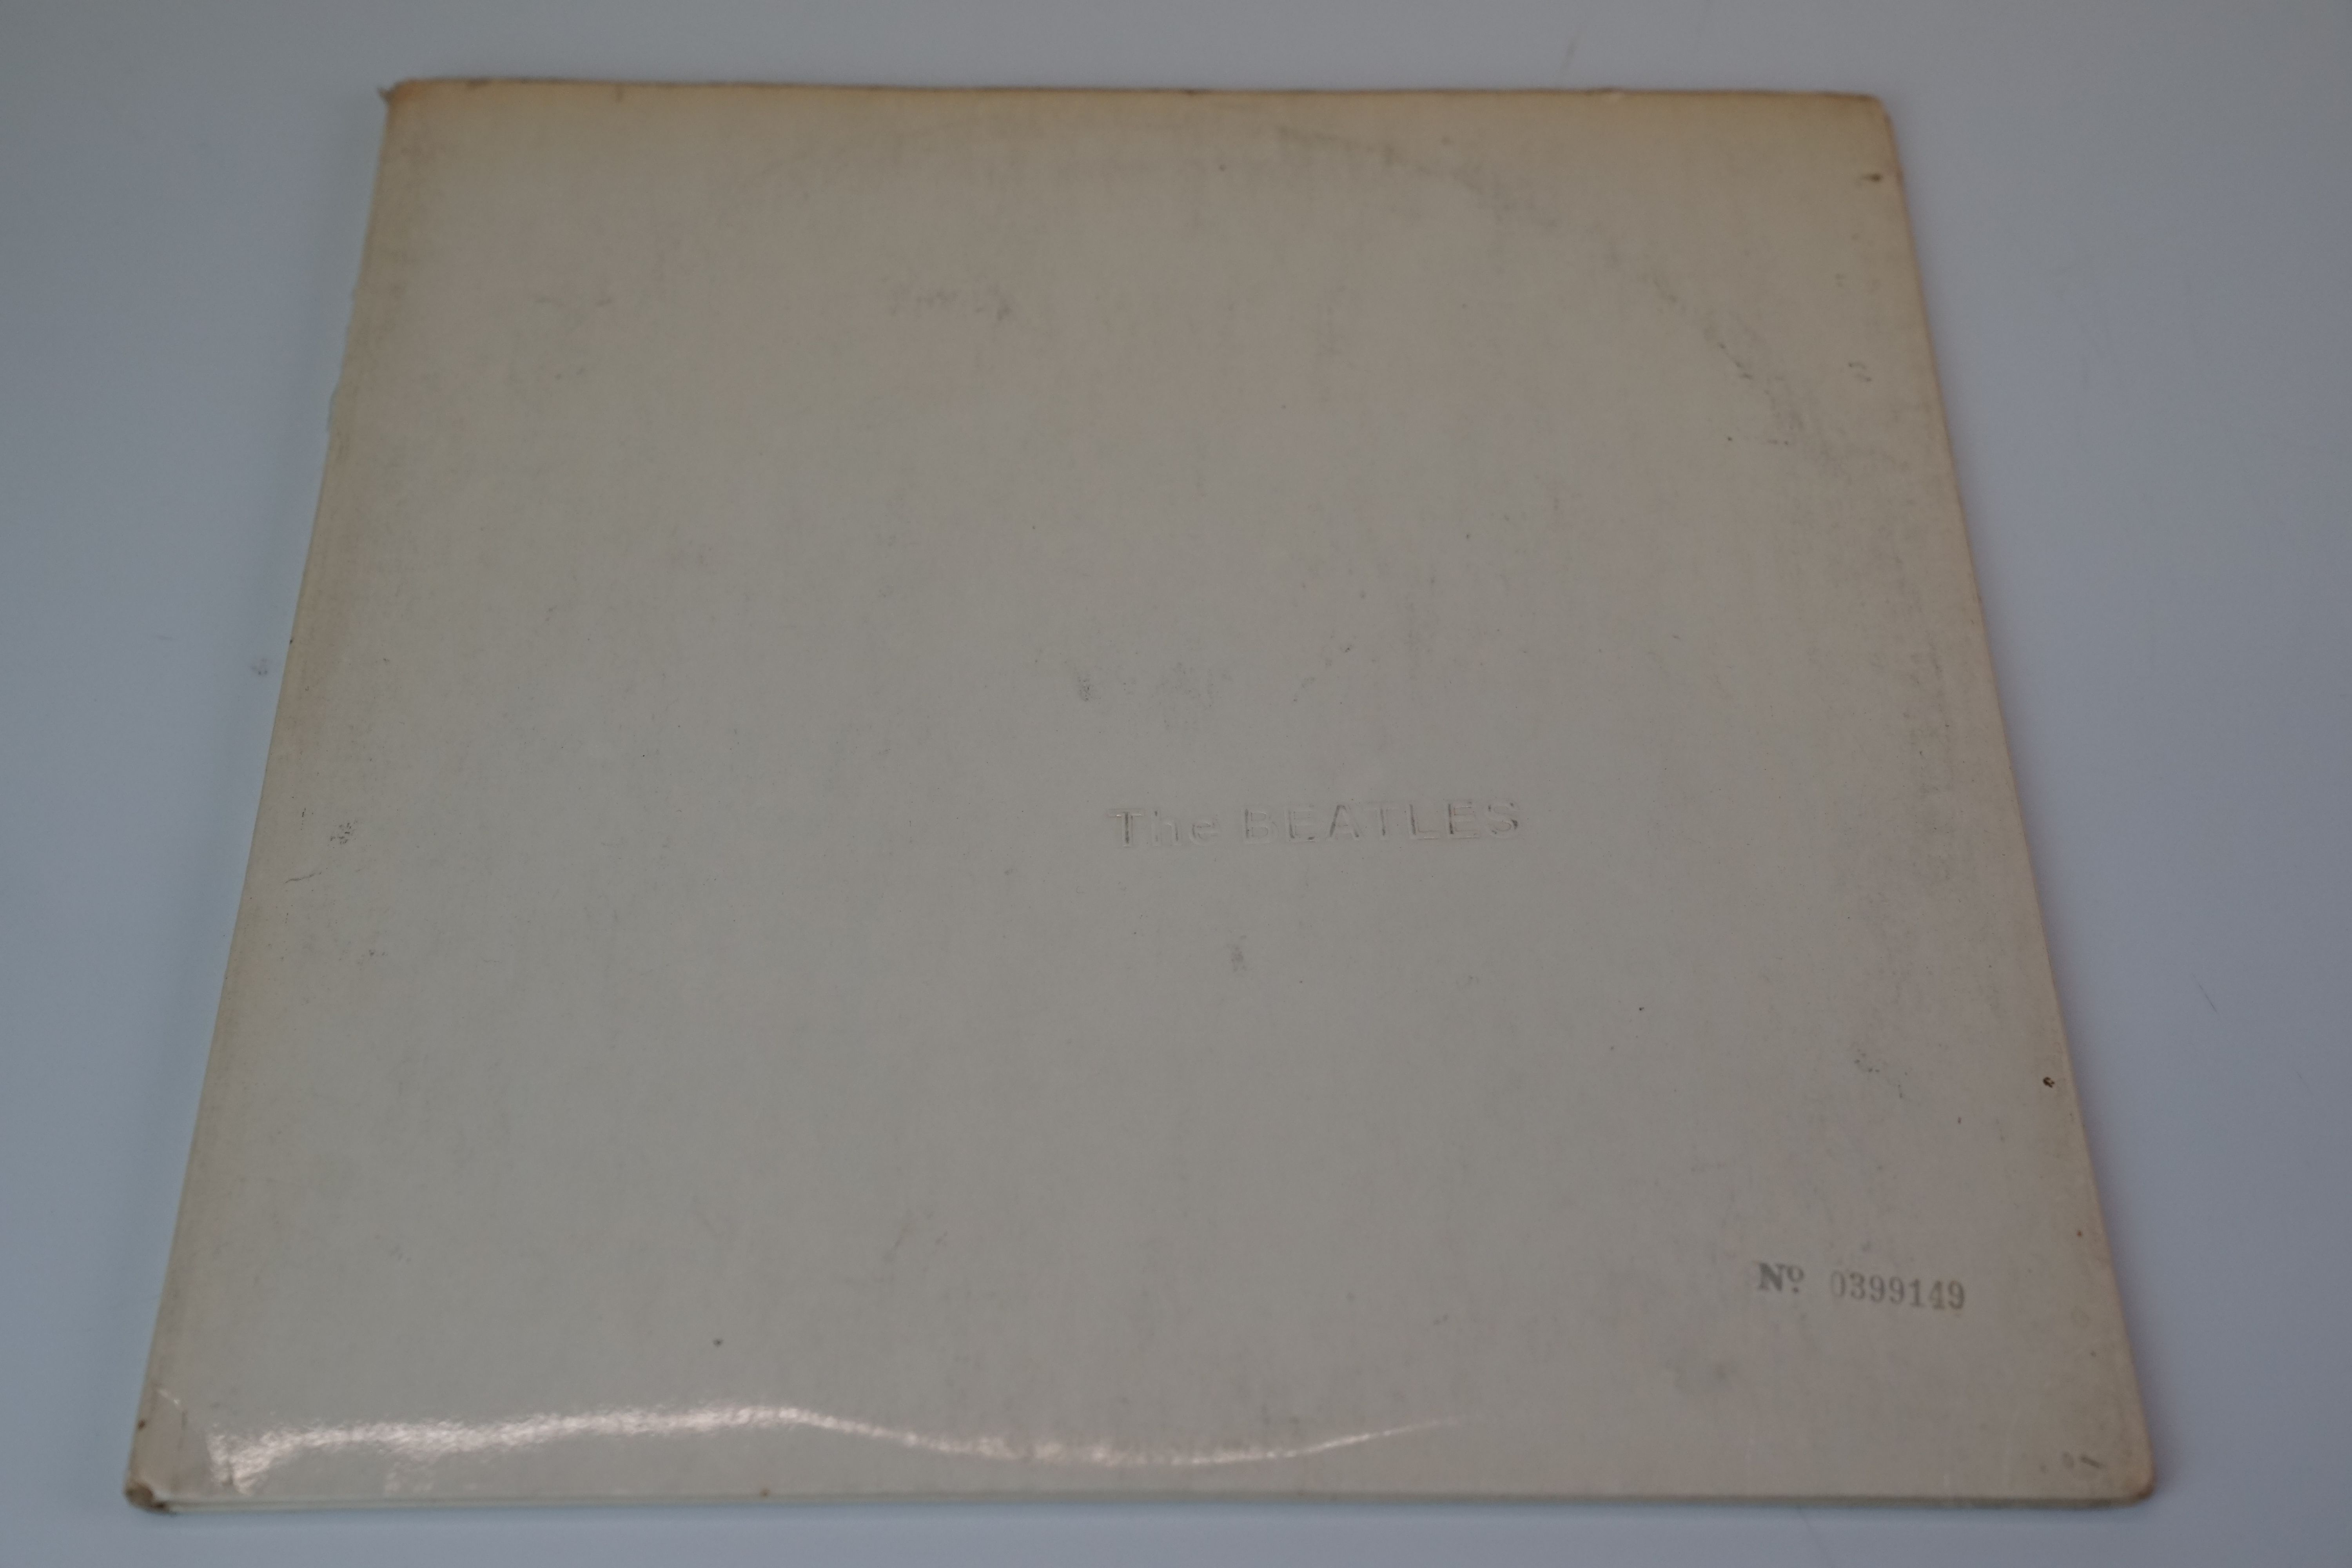 Vinyl - The Beatles White Album (PCS 706718) Stereo top loader No 0399149, three photos (Lennon